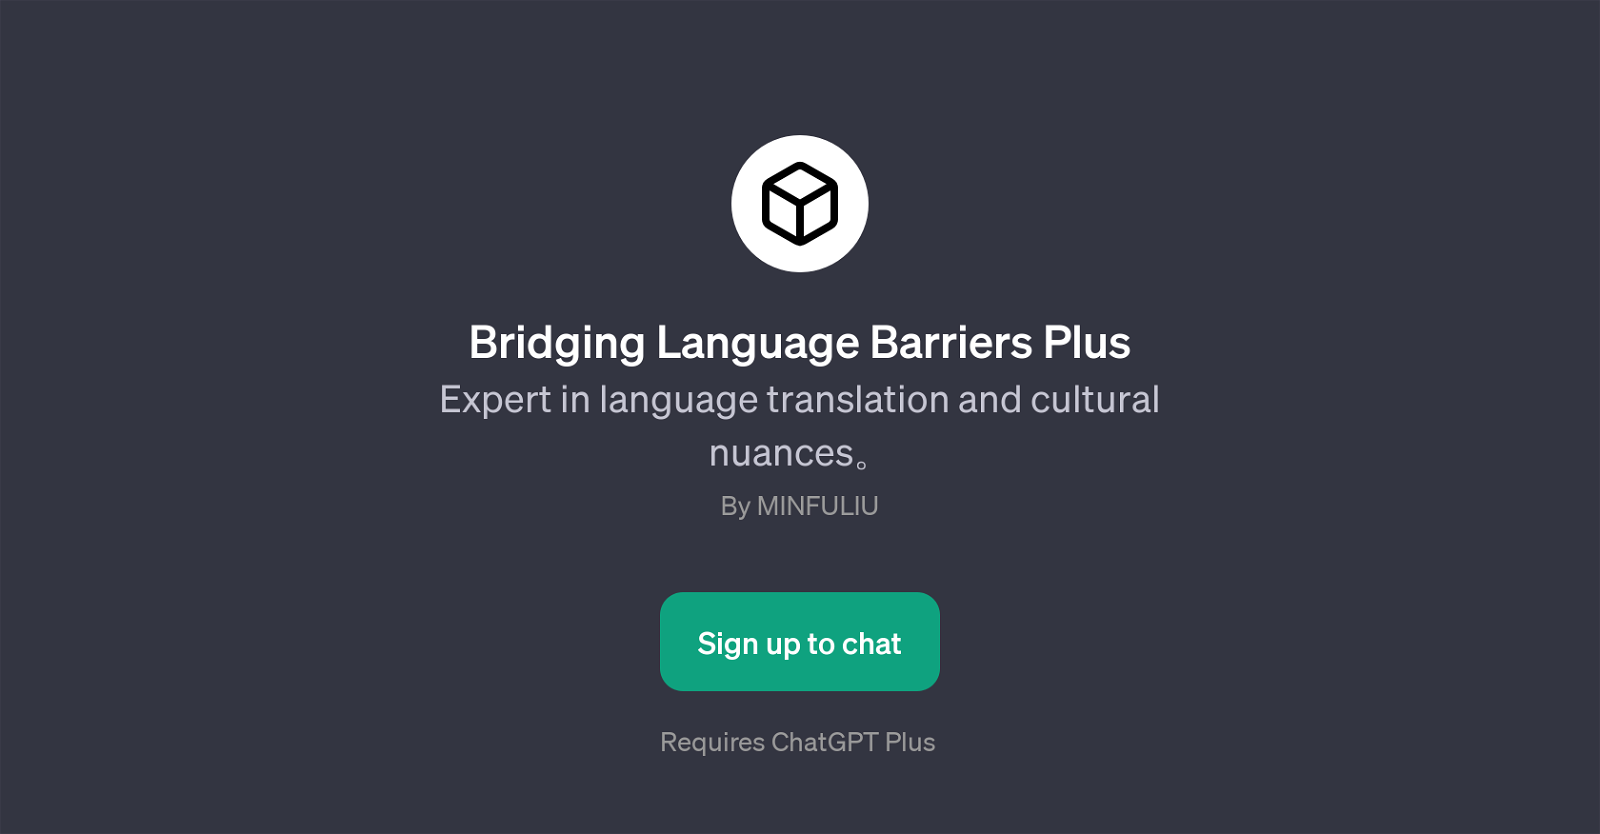 Bridging Language Barriers Plus website